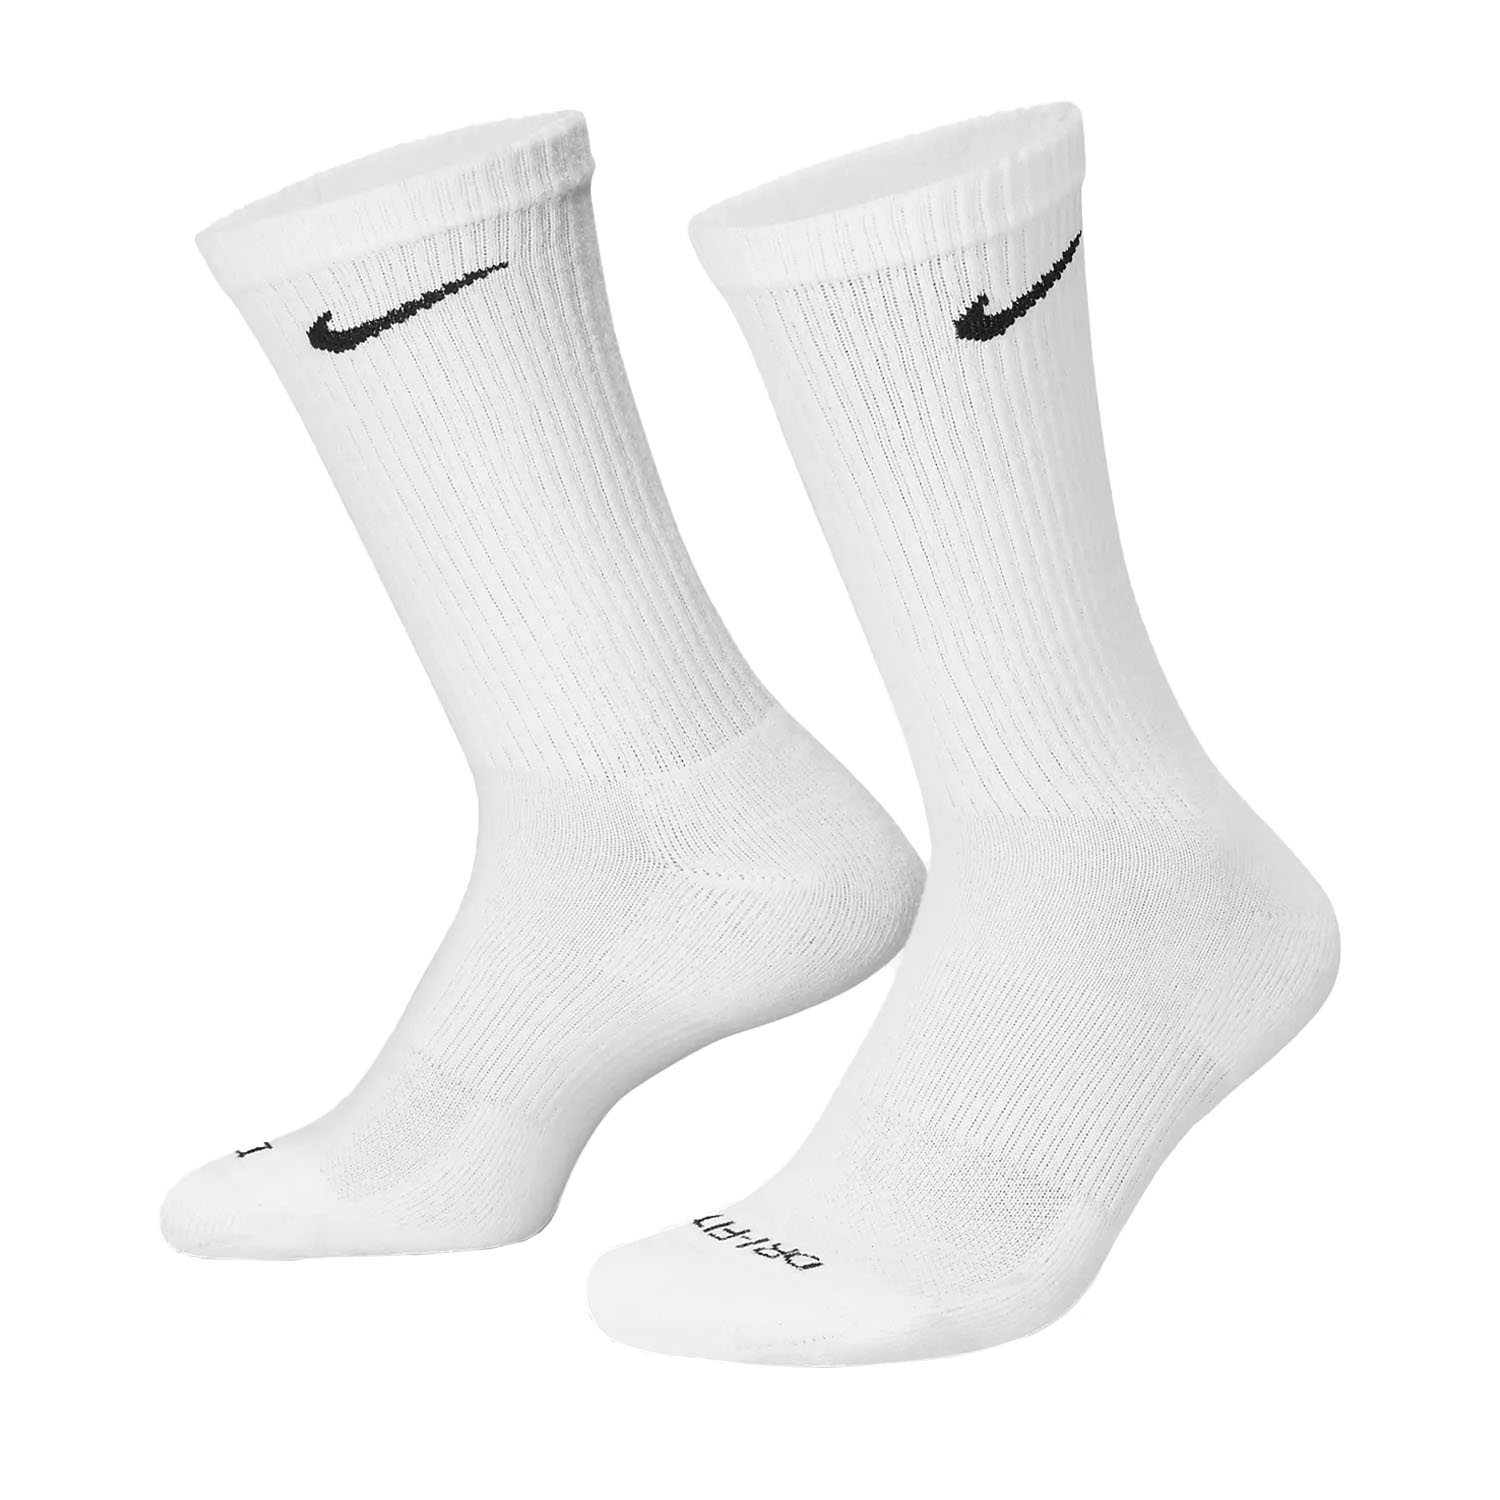 Nike Everyday Plus Cushioned x 3 Tennis Socks - White/Black